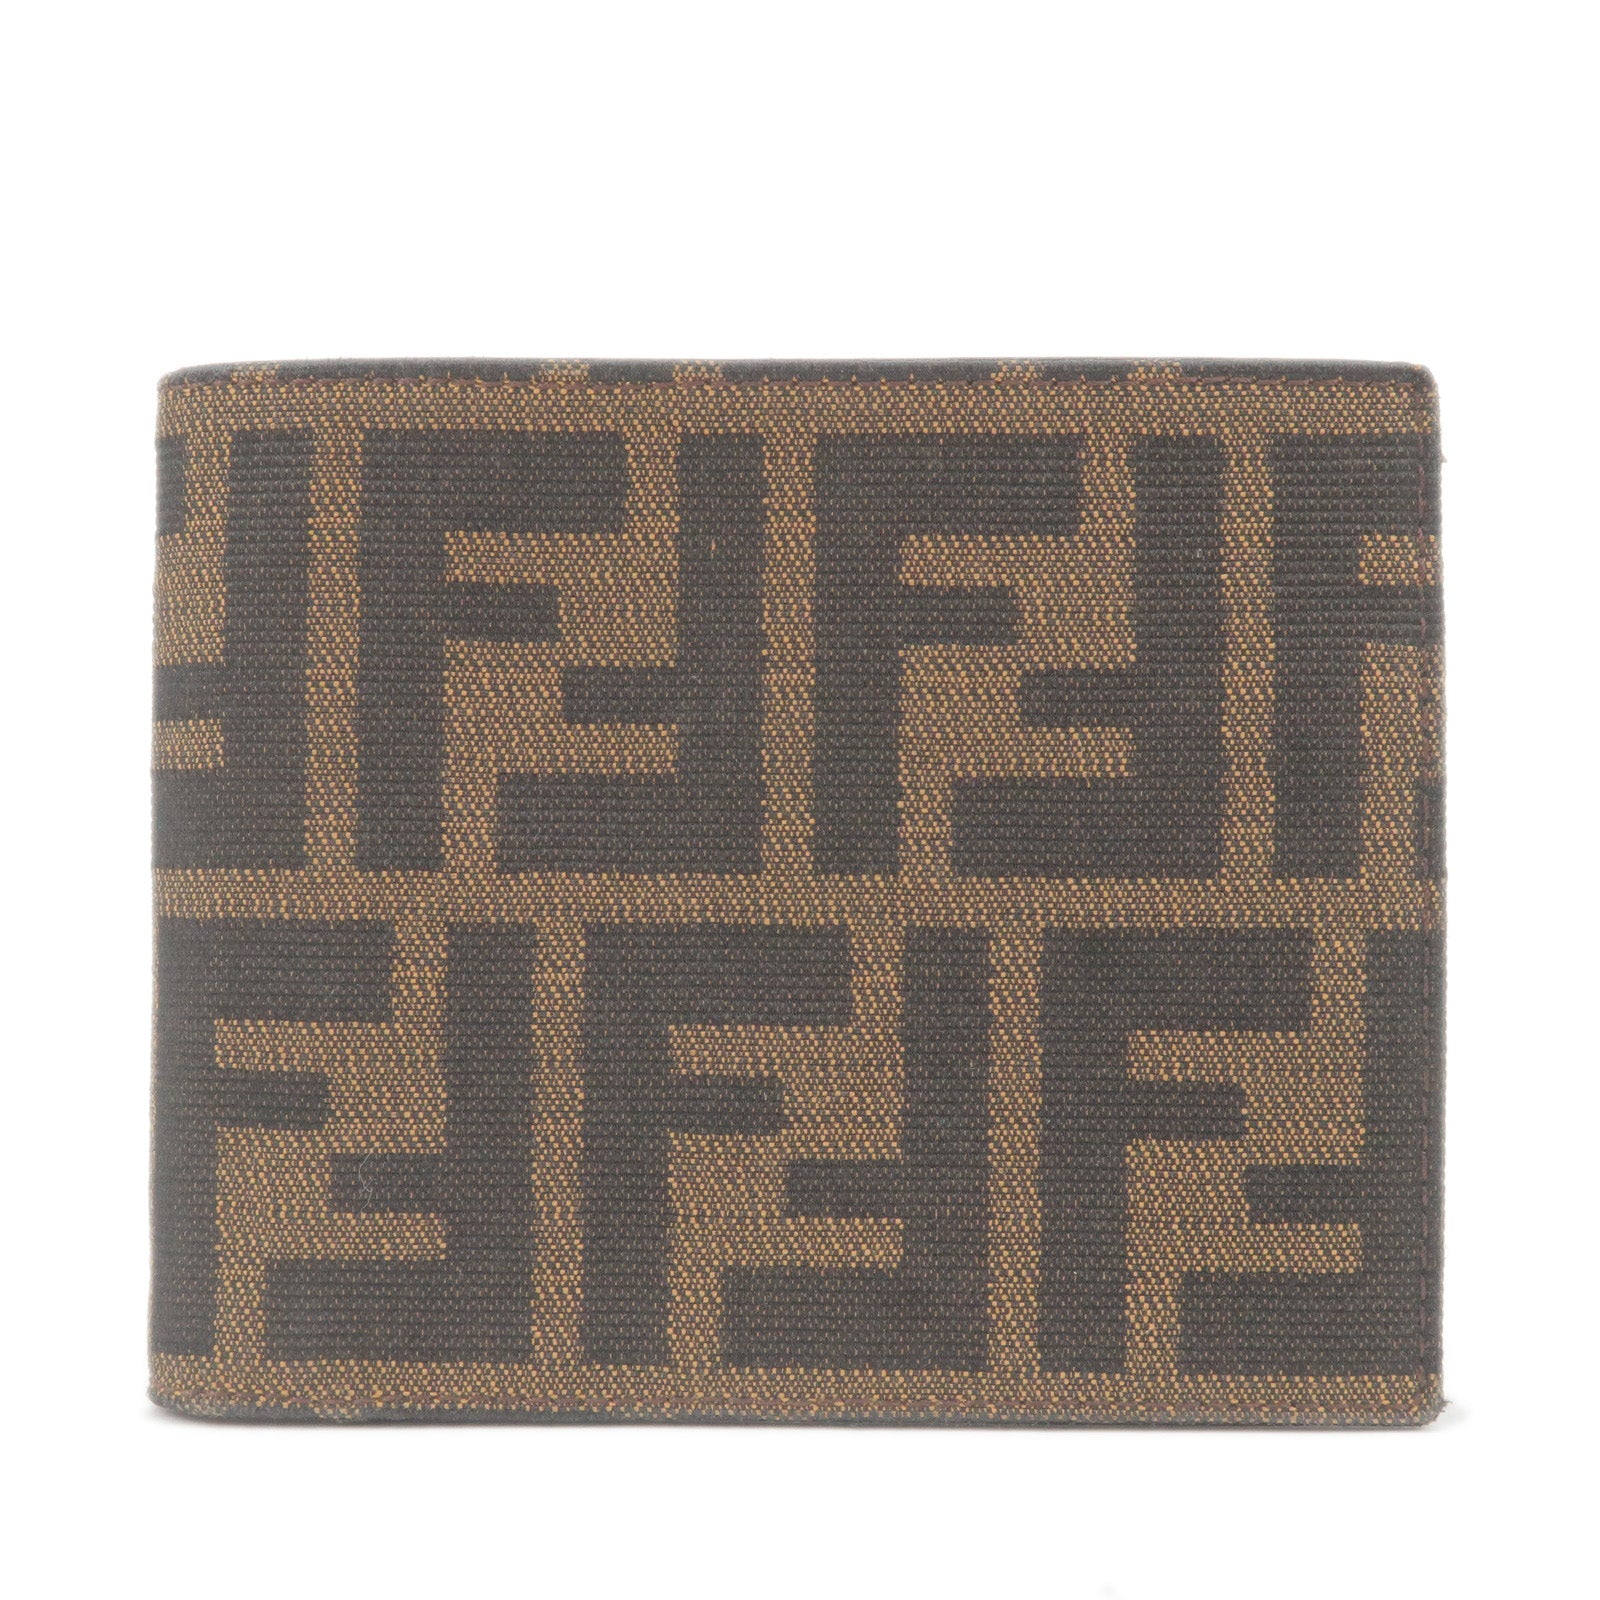 FENDI-Zucca-Canvas-Leather-Bi-Fold-Wallet-Brown-Black-7M0001